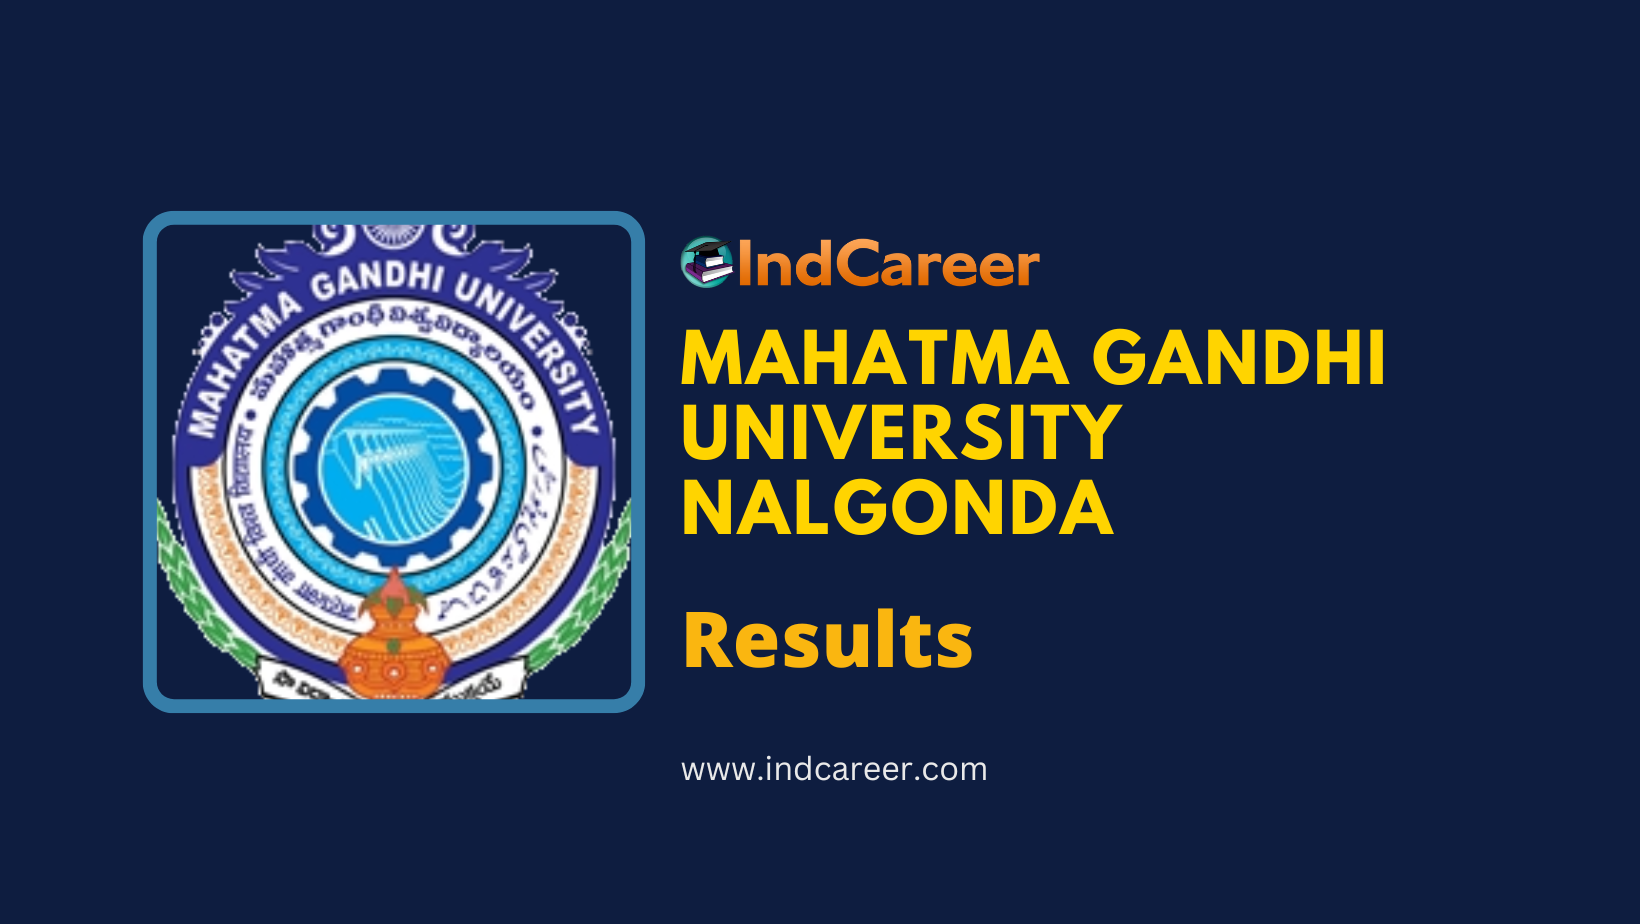 MGU Nalgonda Results Mguniversity.Ac.In Check UG, PG Results Here